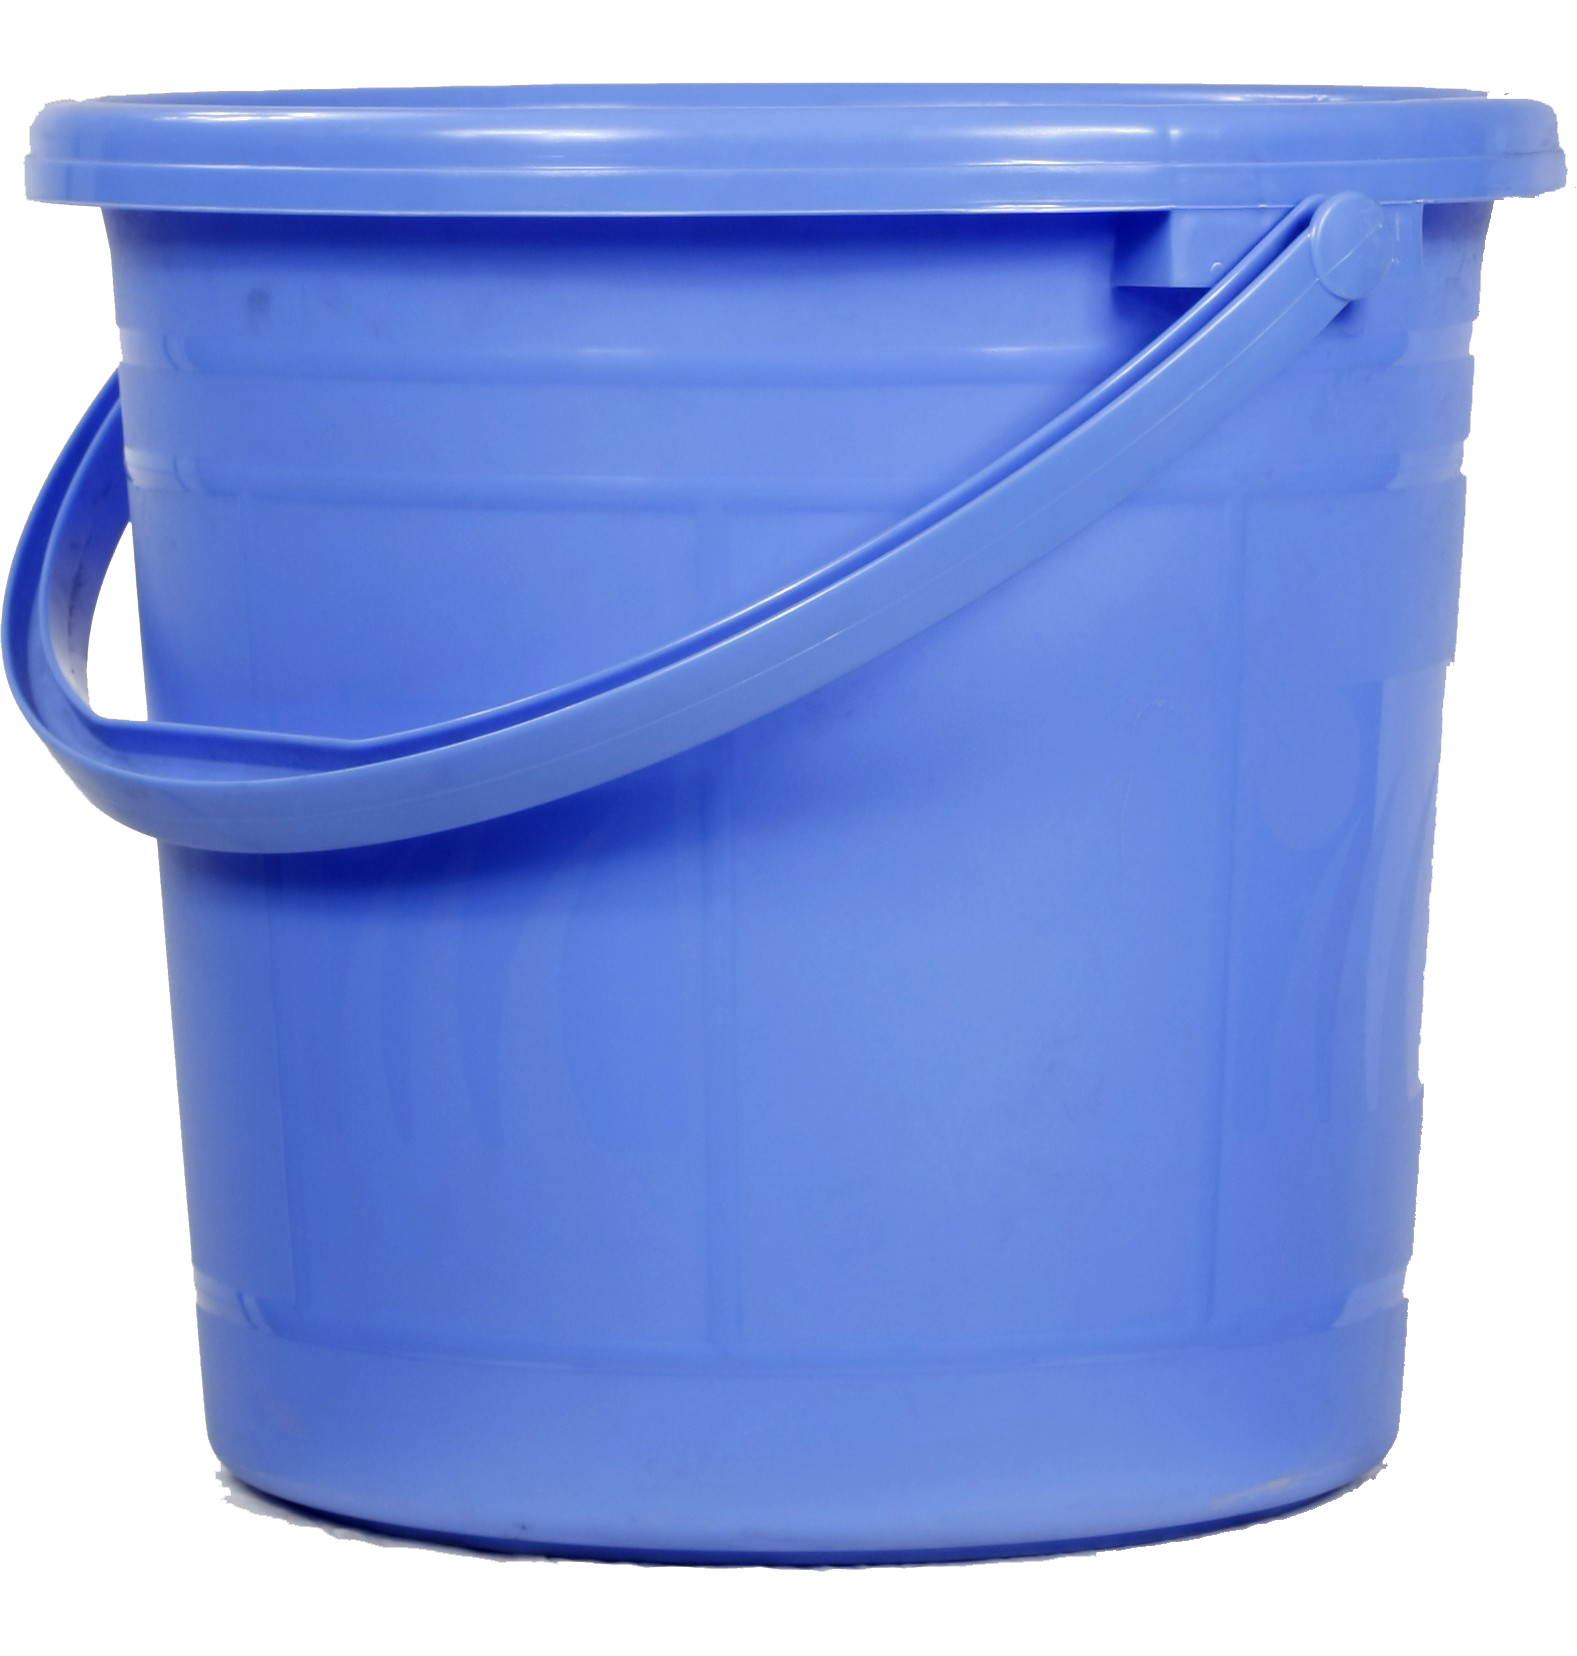 Plastic Bucket PNG Image Background